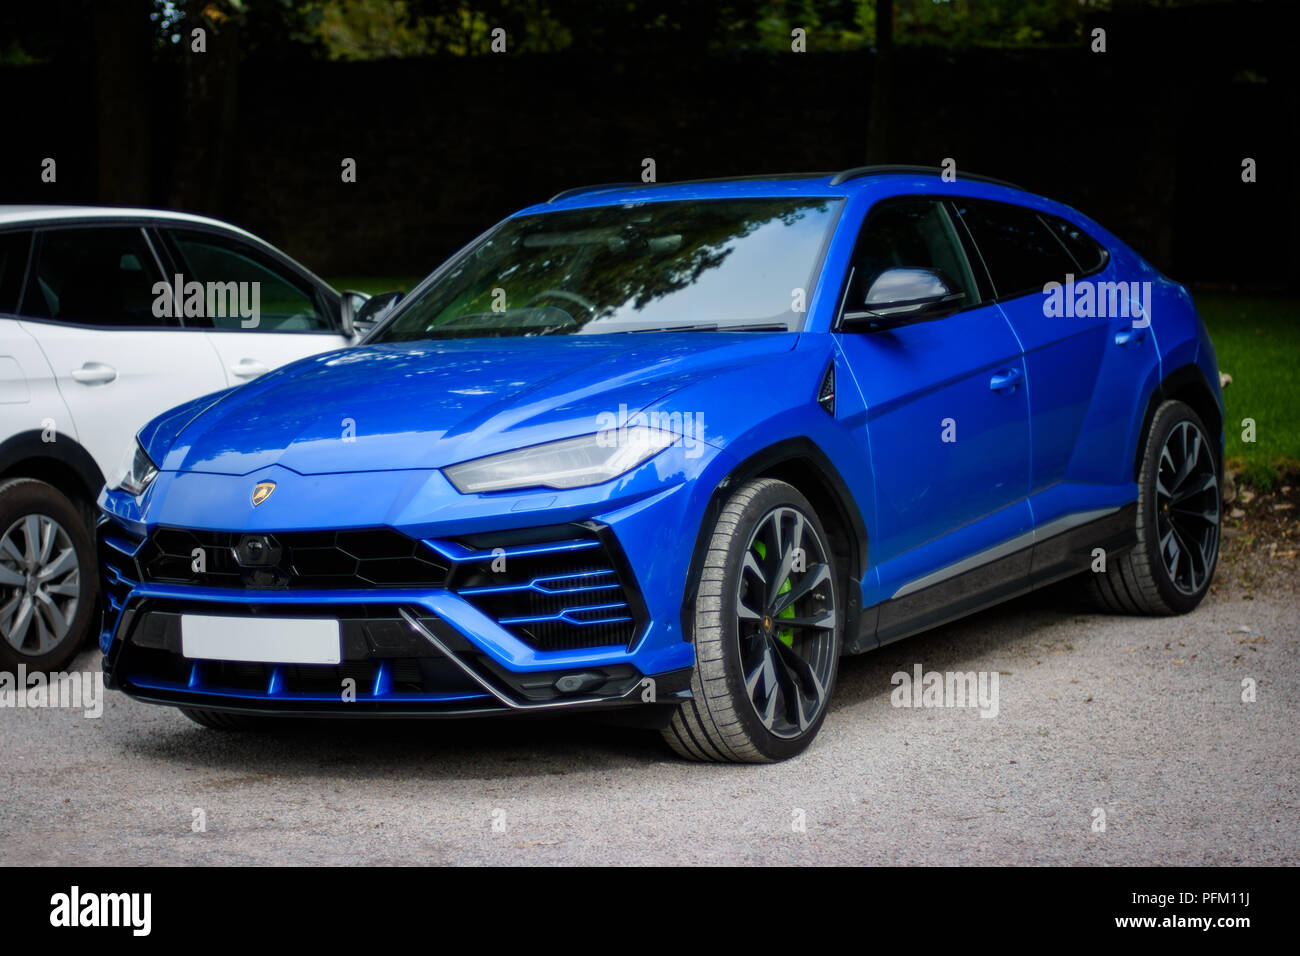 Blue Lamborghini Stockfotos & Blue Lamborghini Bilder - Alamy